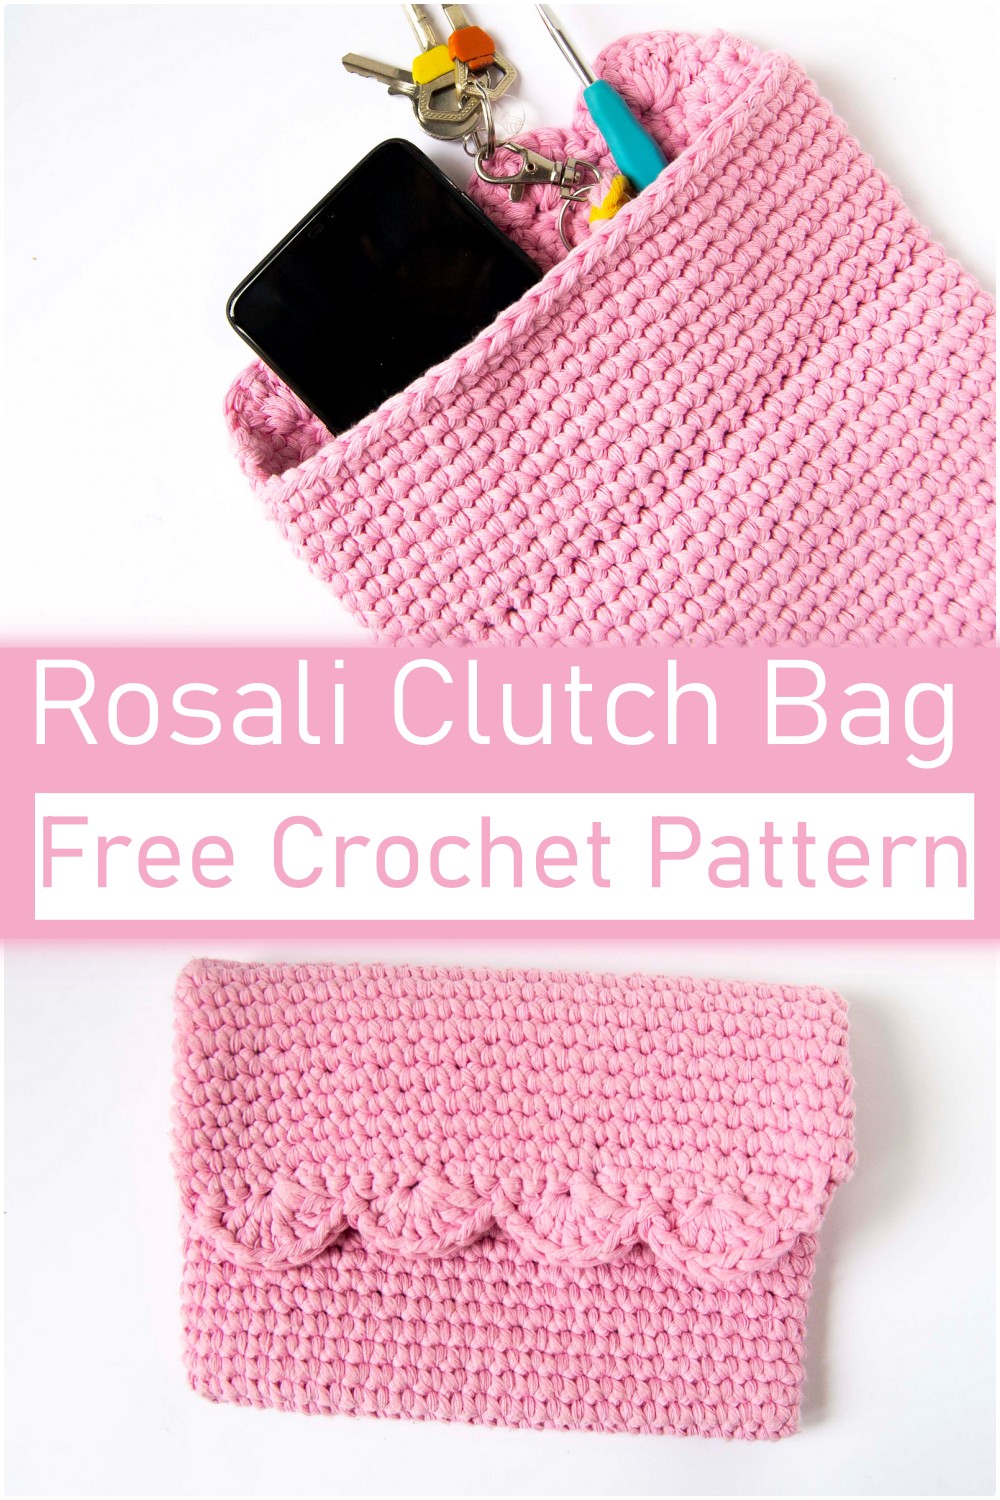 Rosali Clutch Bag